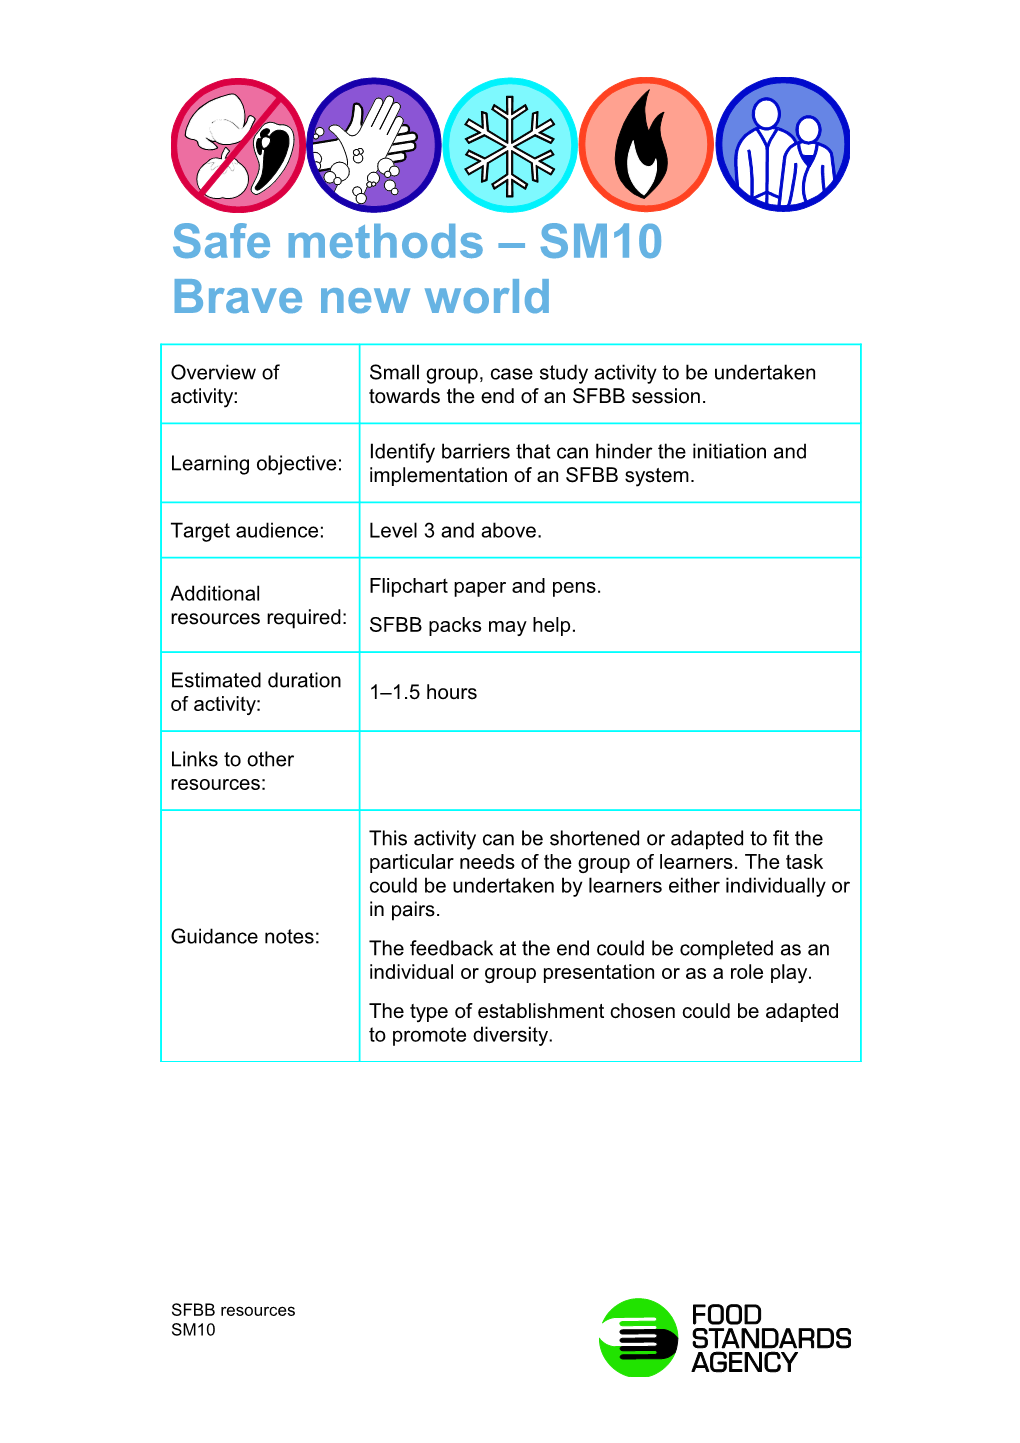 Safe Methods SM10 Brave New World